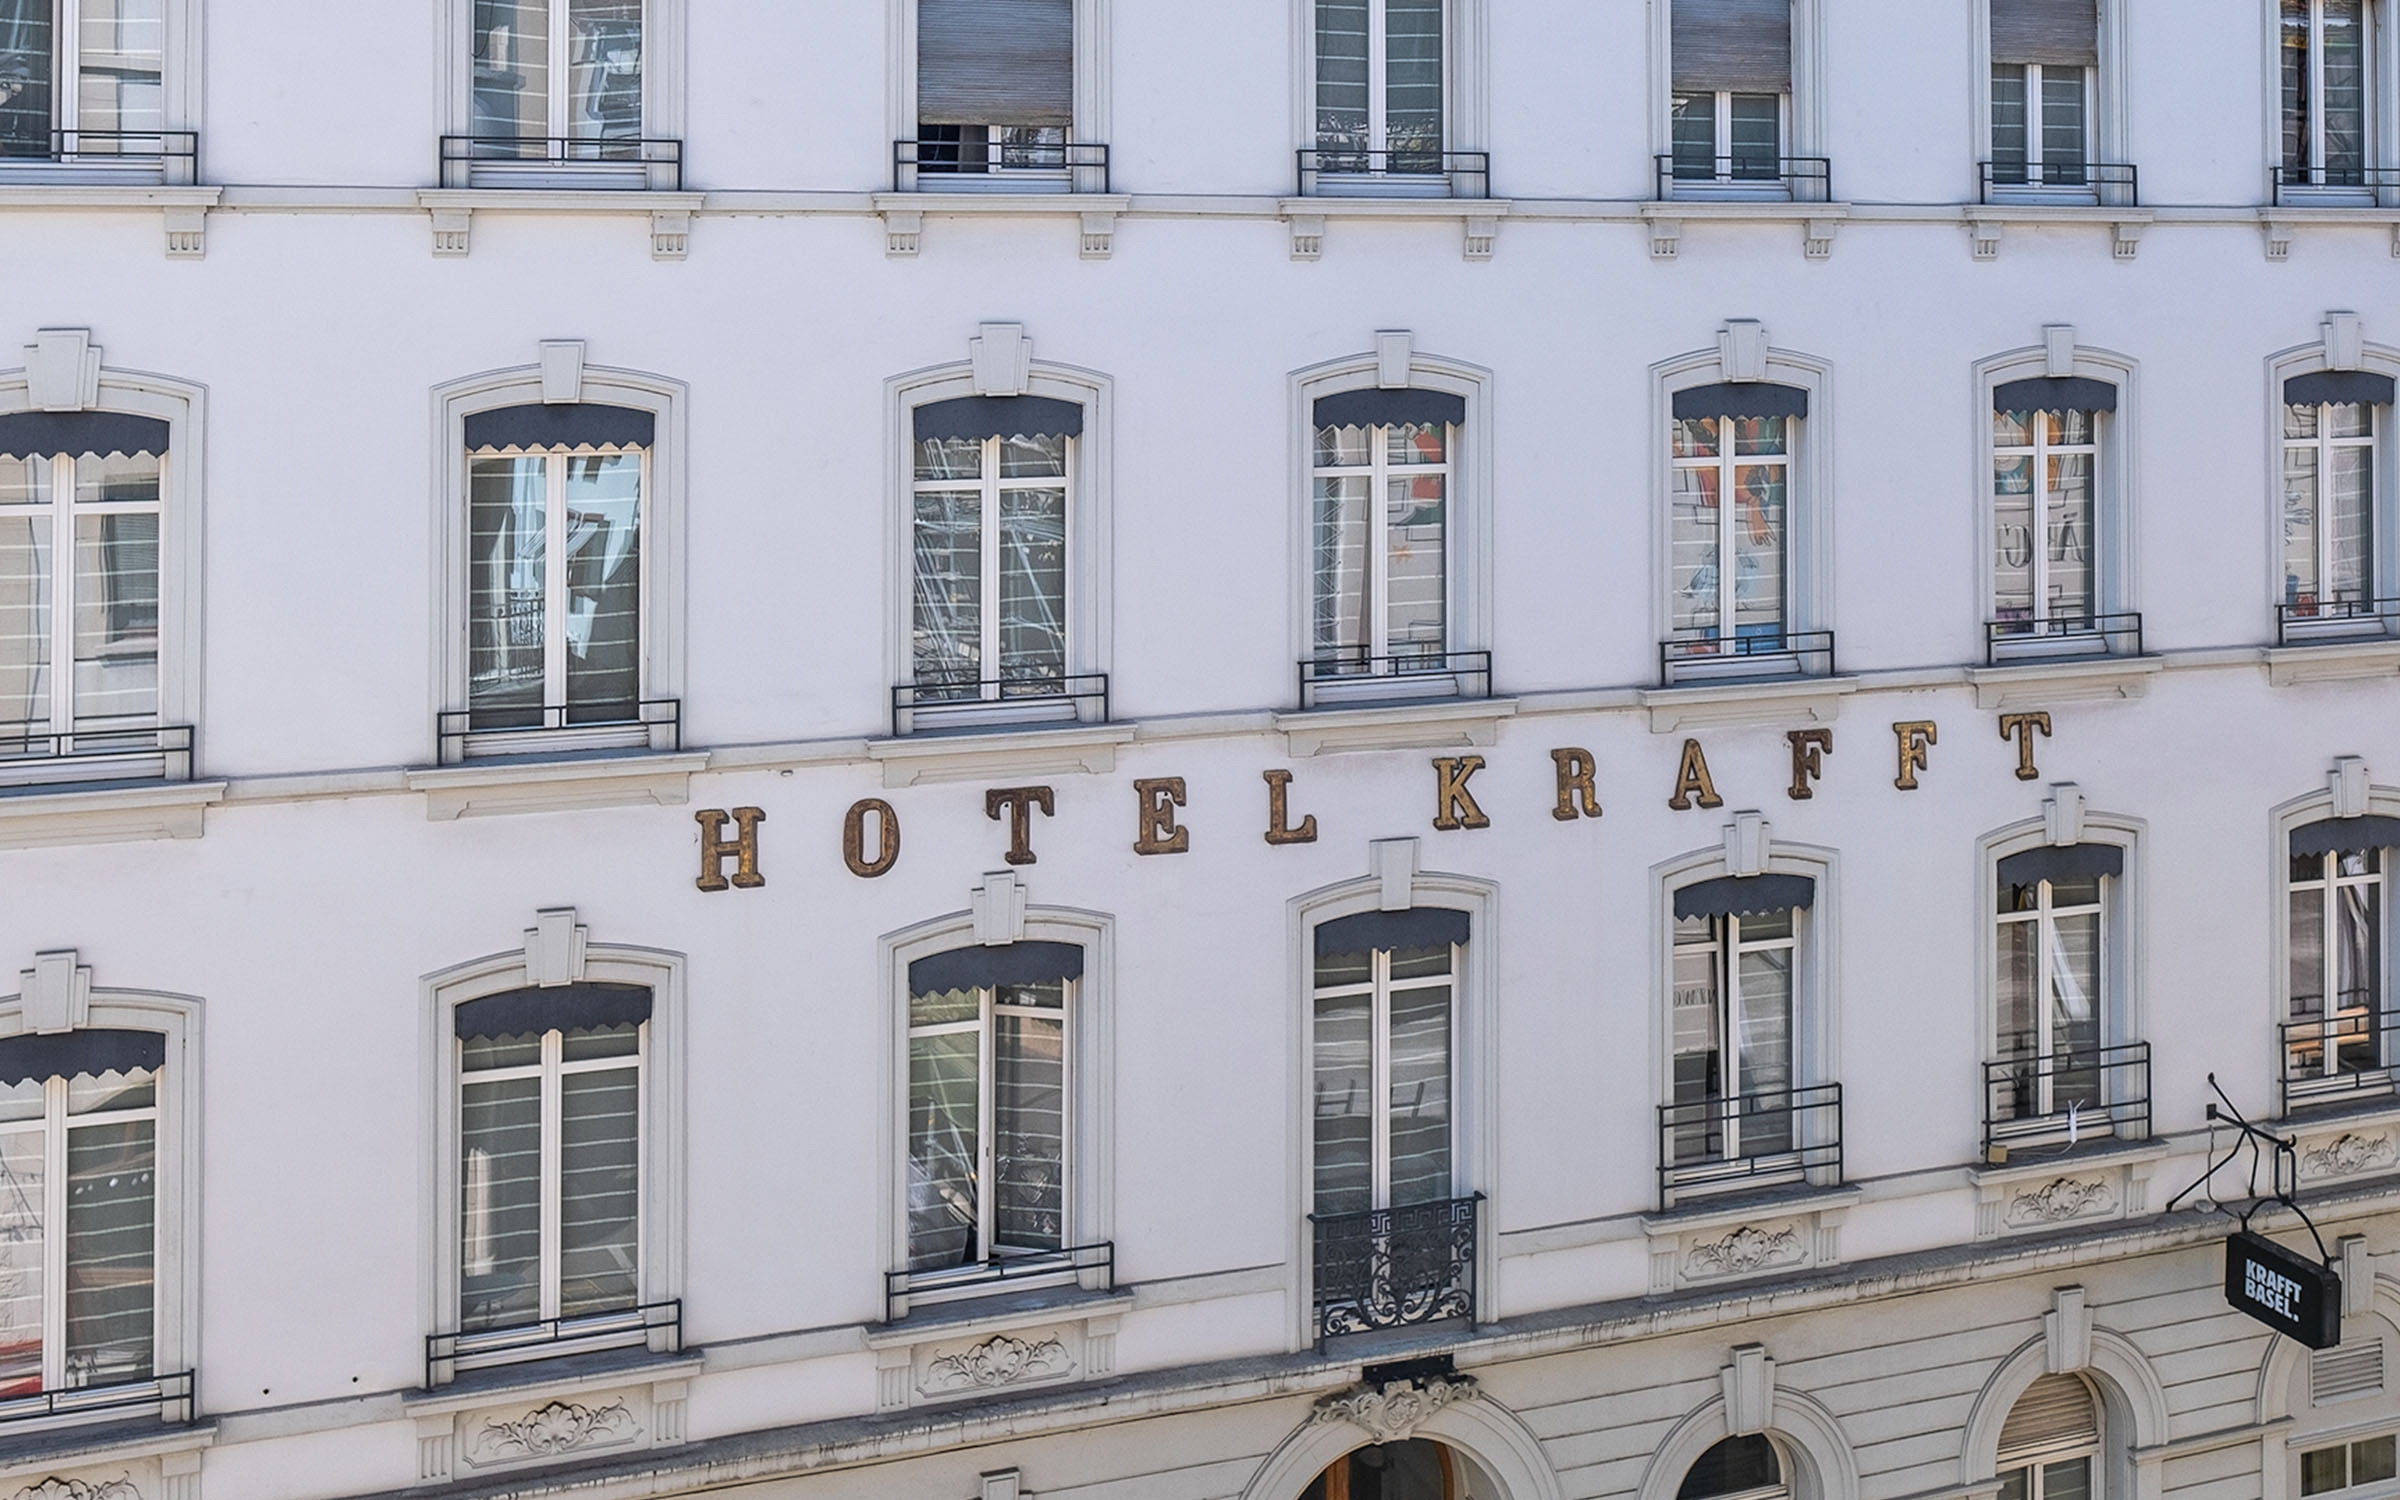 Portrait krafft basel swiss historic hotels 01